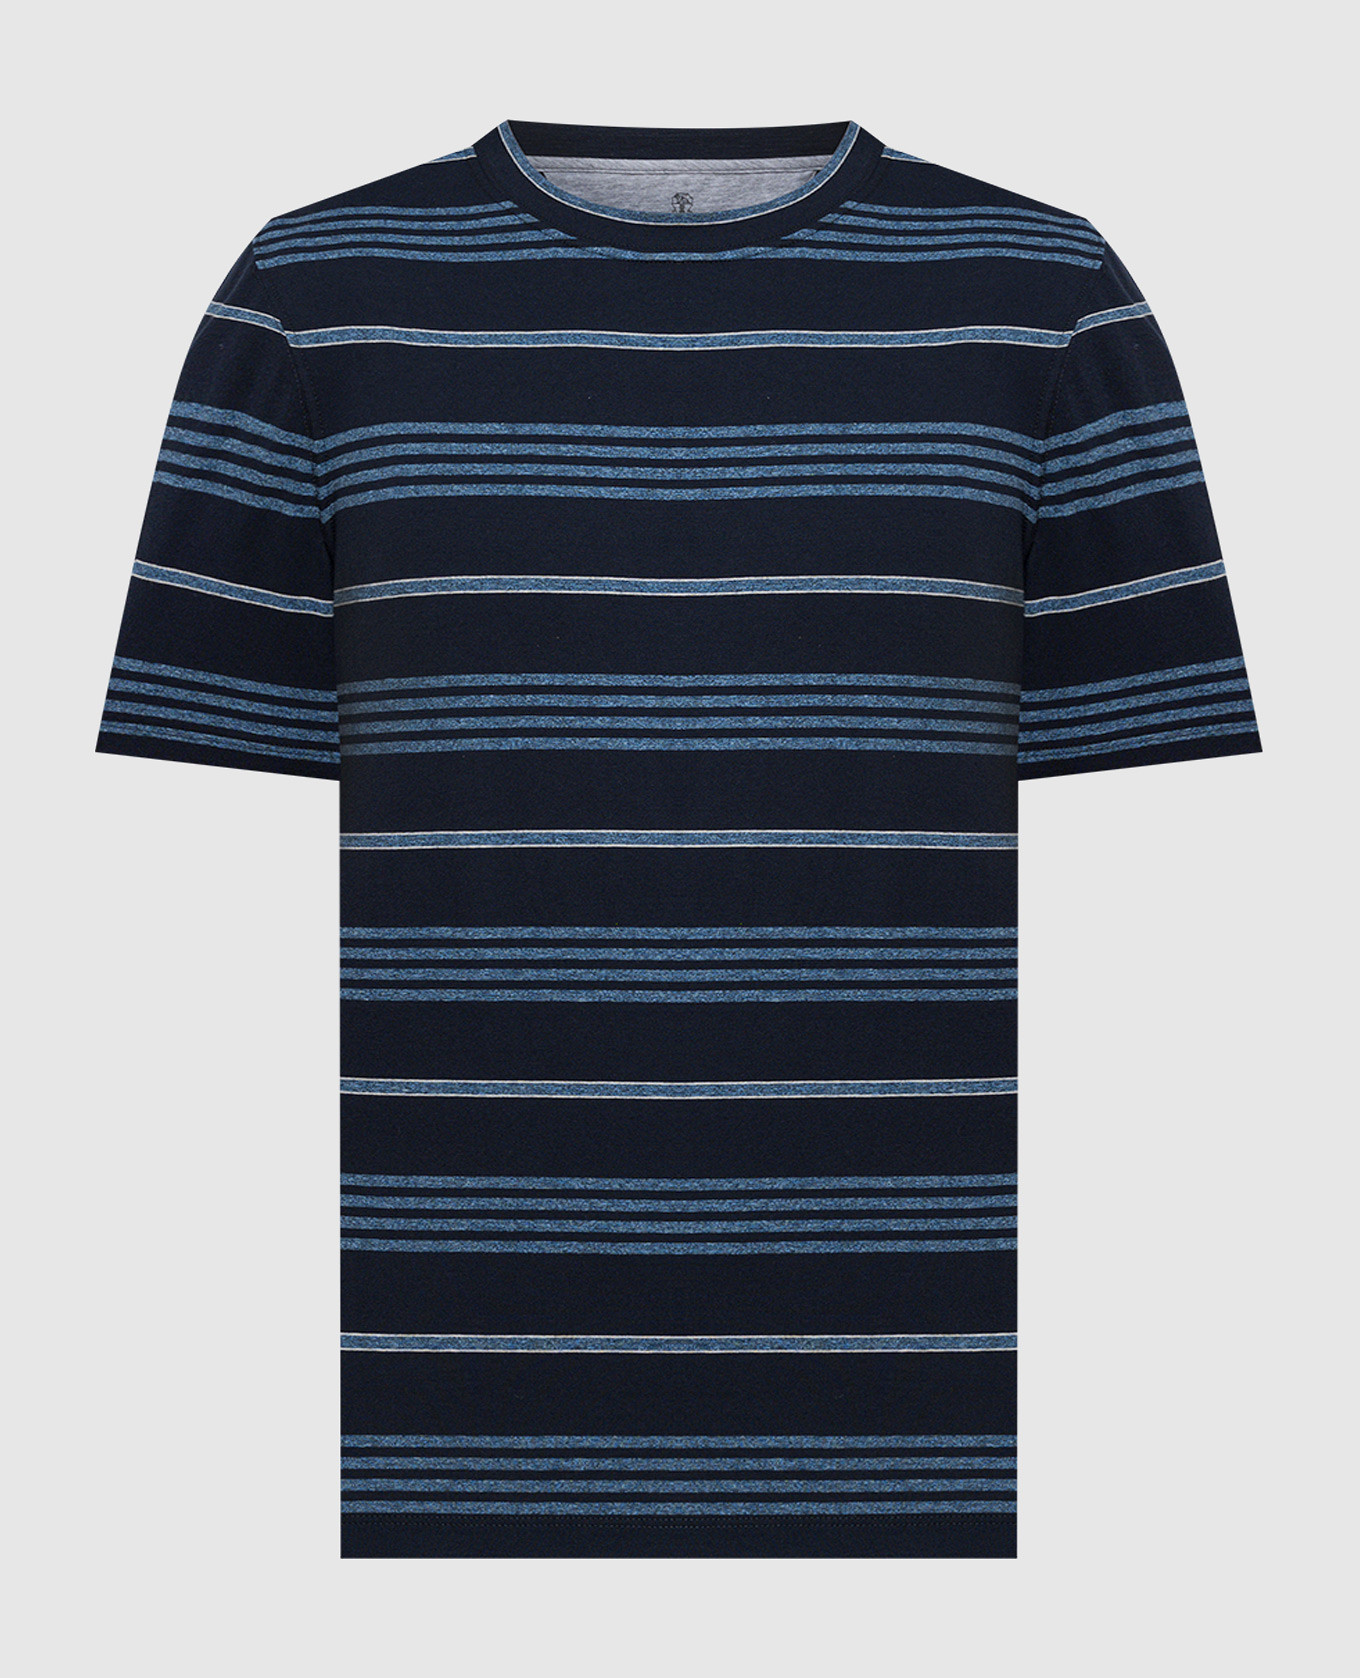 Blue striped T-shirt